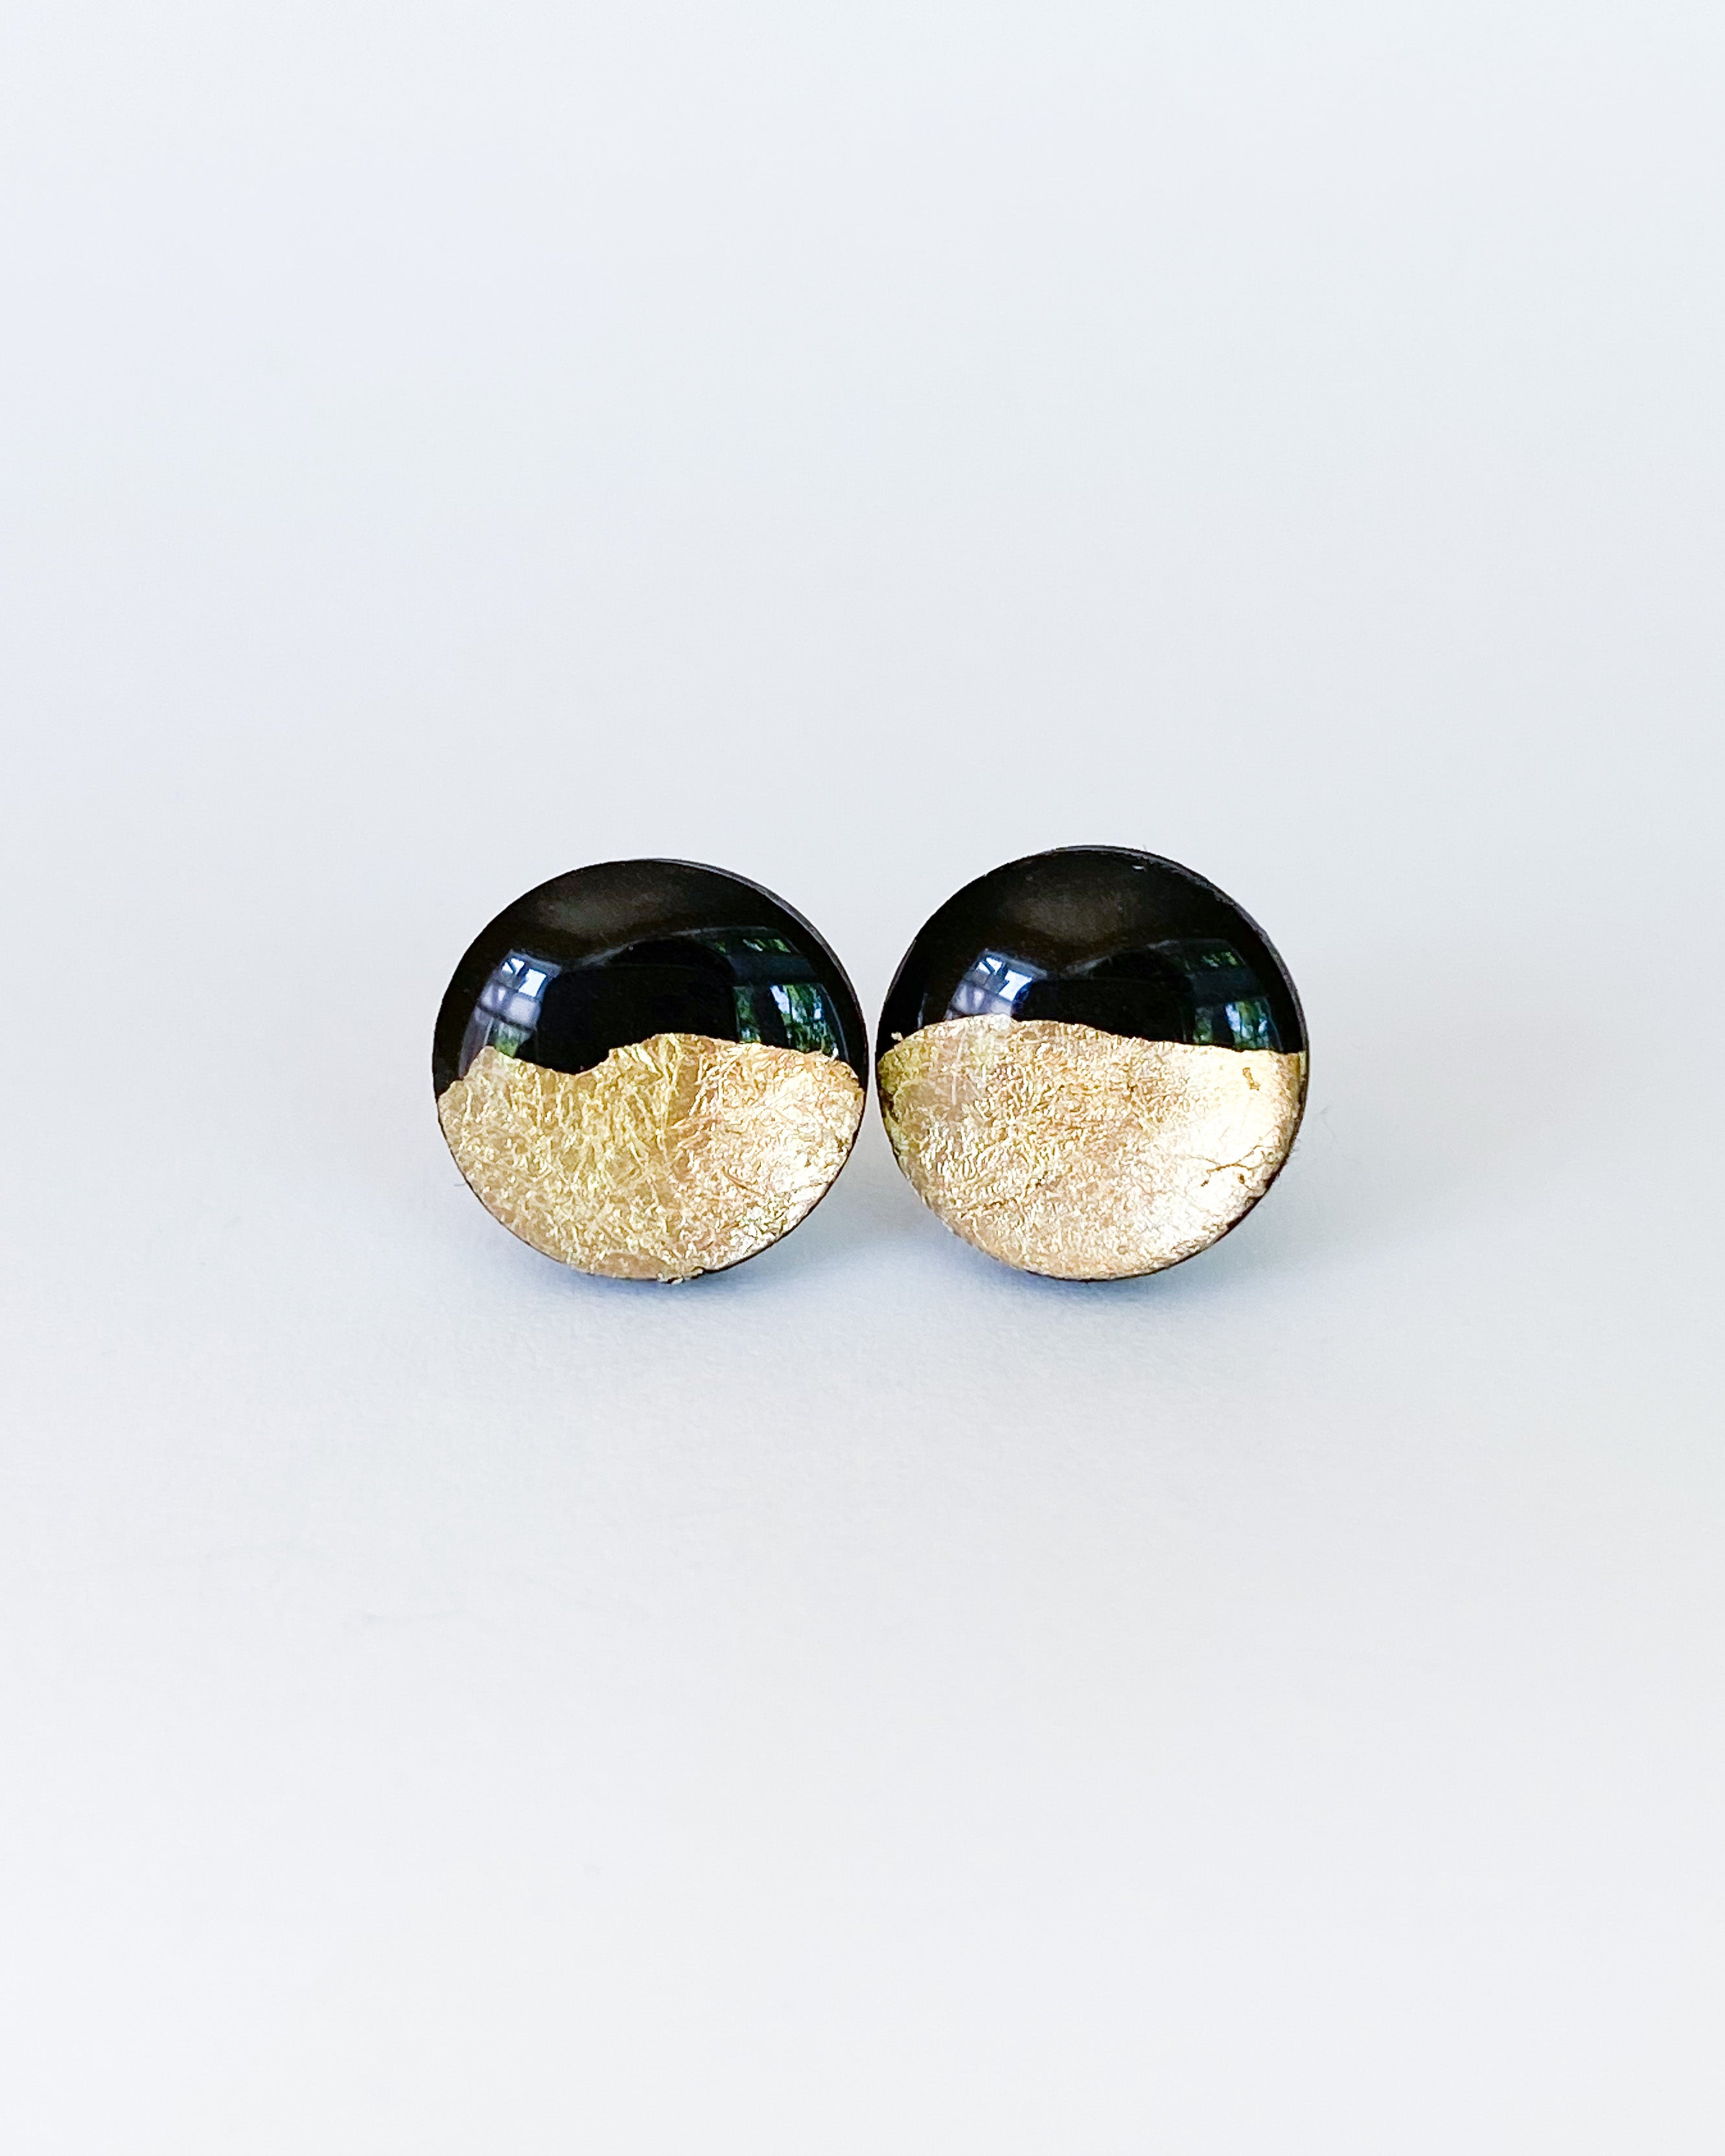 Black and gold stud earrings freeshipping - Ollijewelry